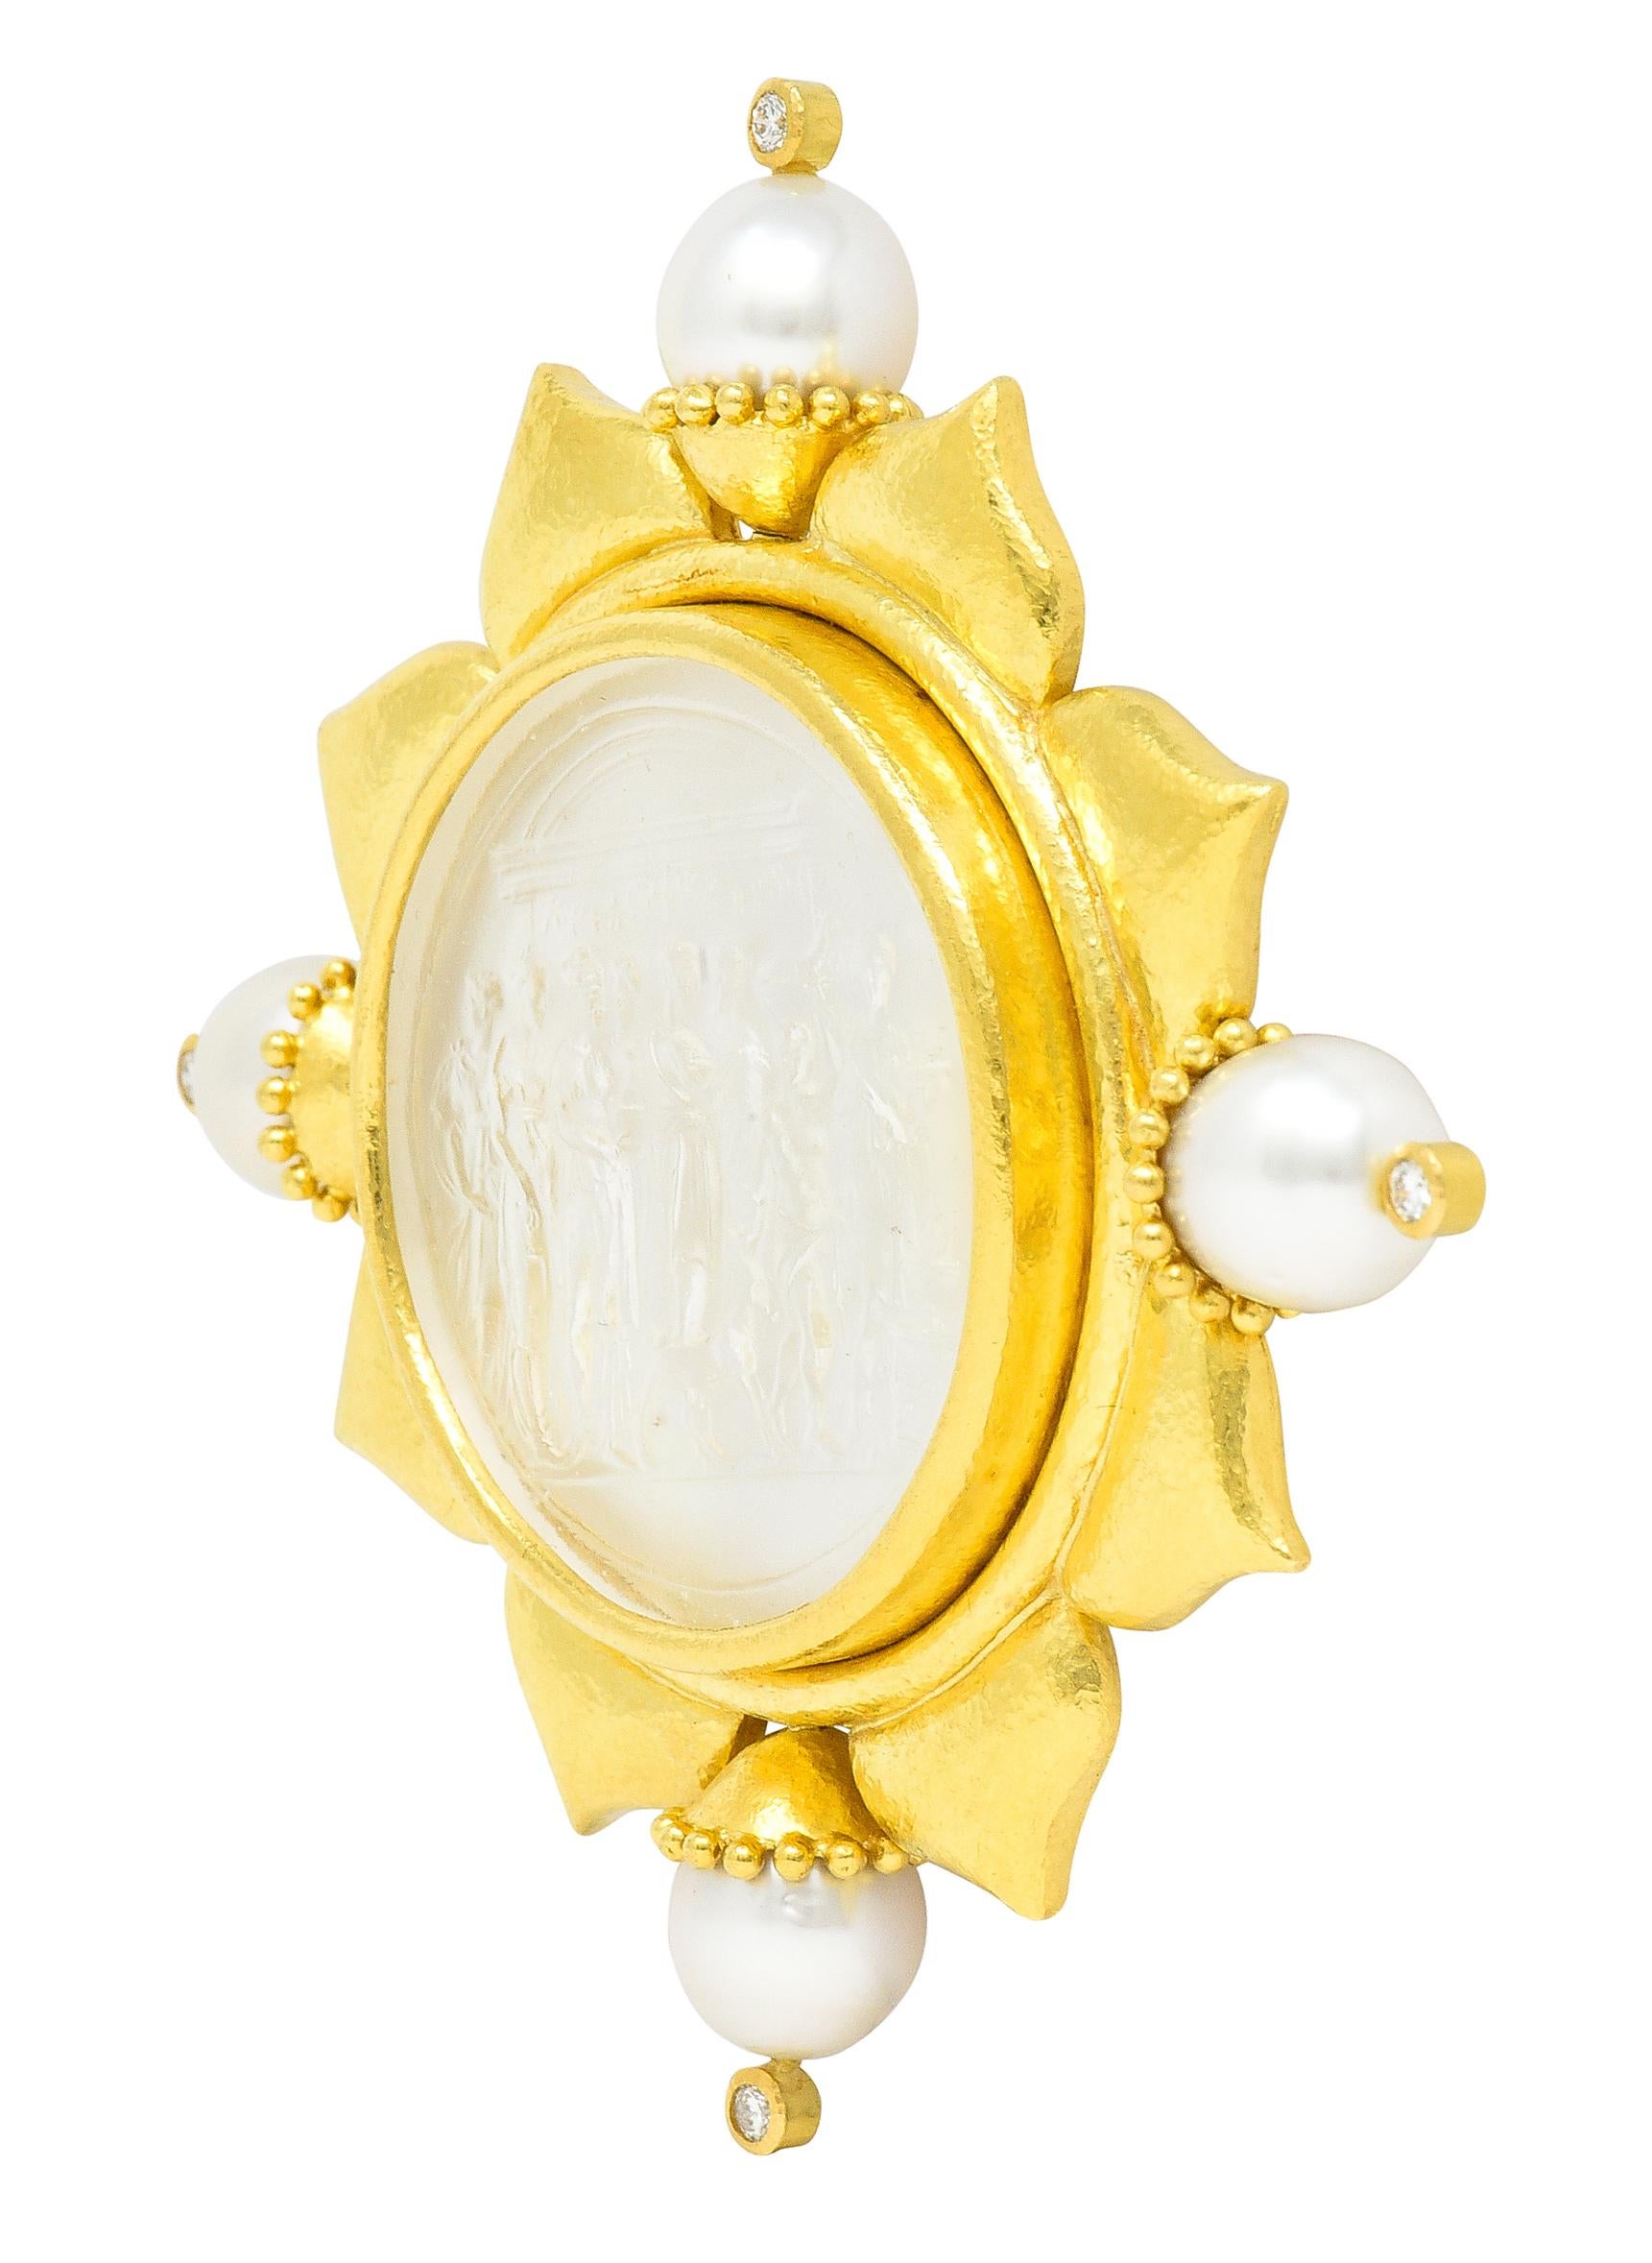 Brilliant Cut Elizabeth Locke Pearl Diamond Mother Pearl Venetian Glass 18 Karat Gold Brooch